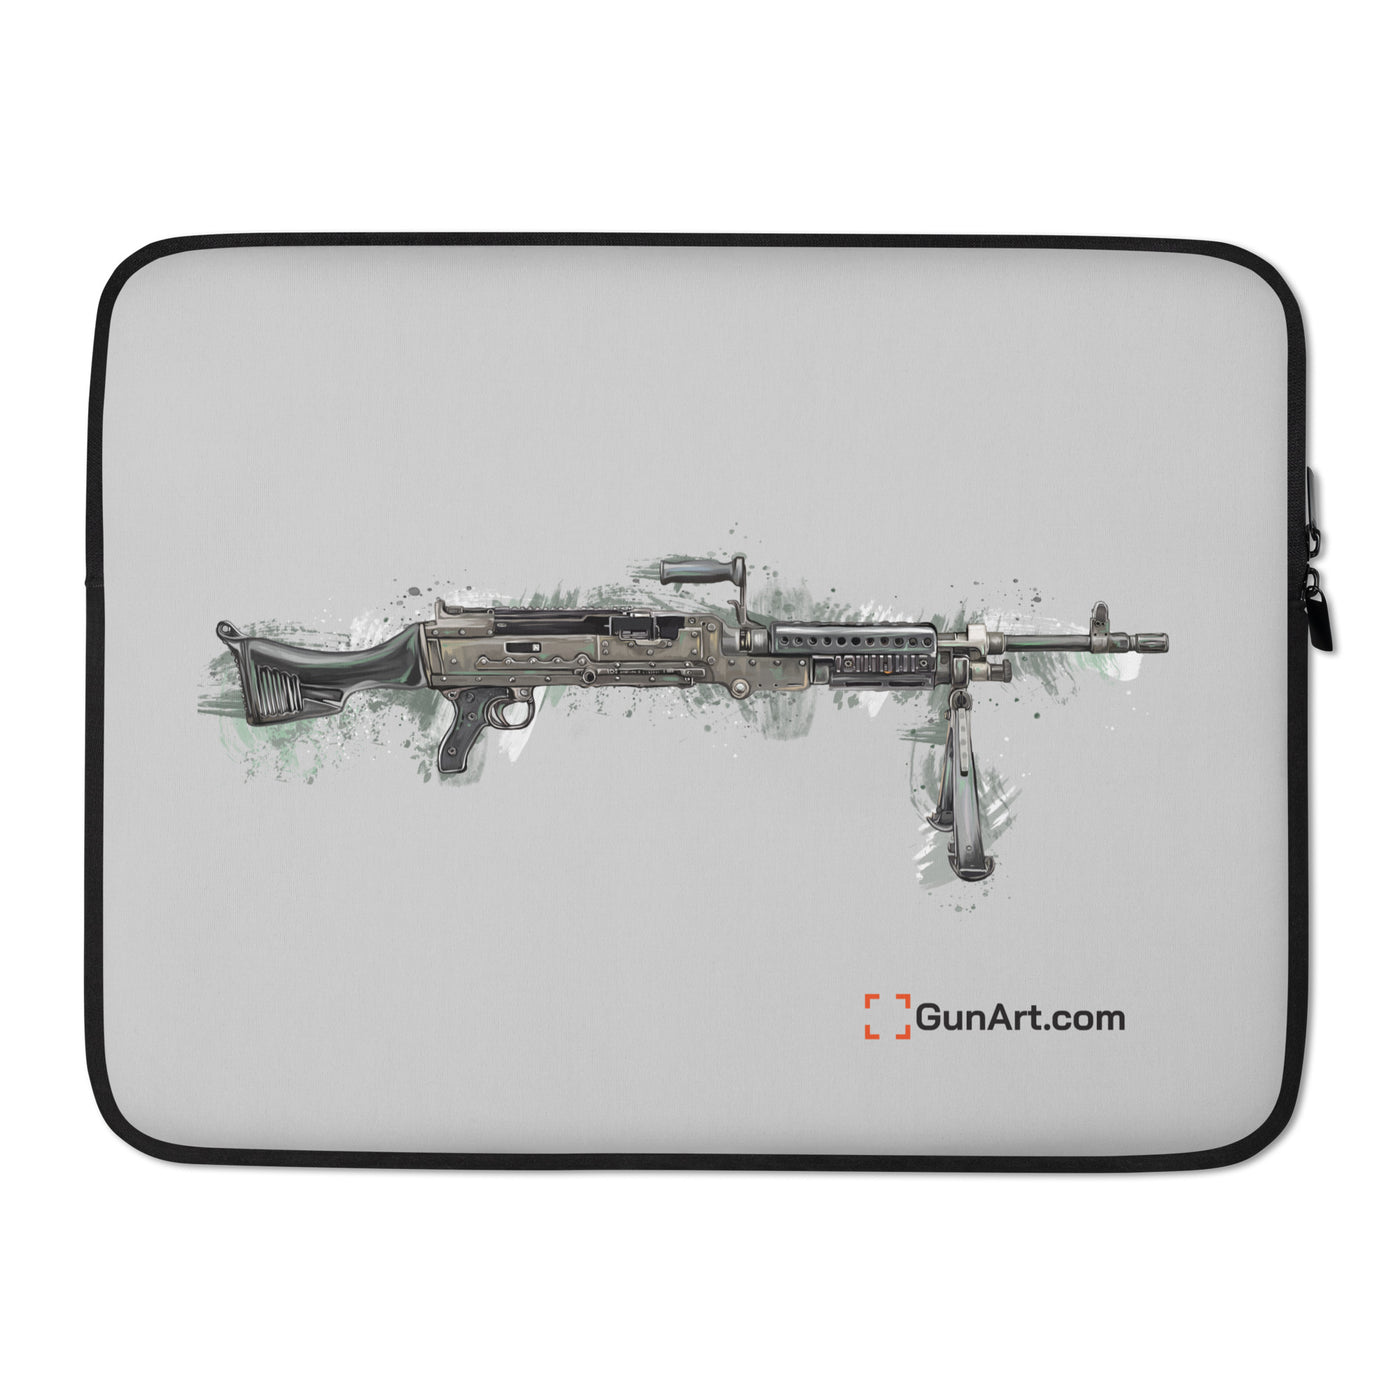 M240B - Belt Fed 7.62x51 Machine Gun Laptop Sleeve - Grey Background